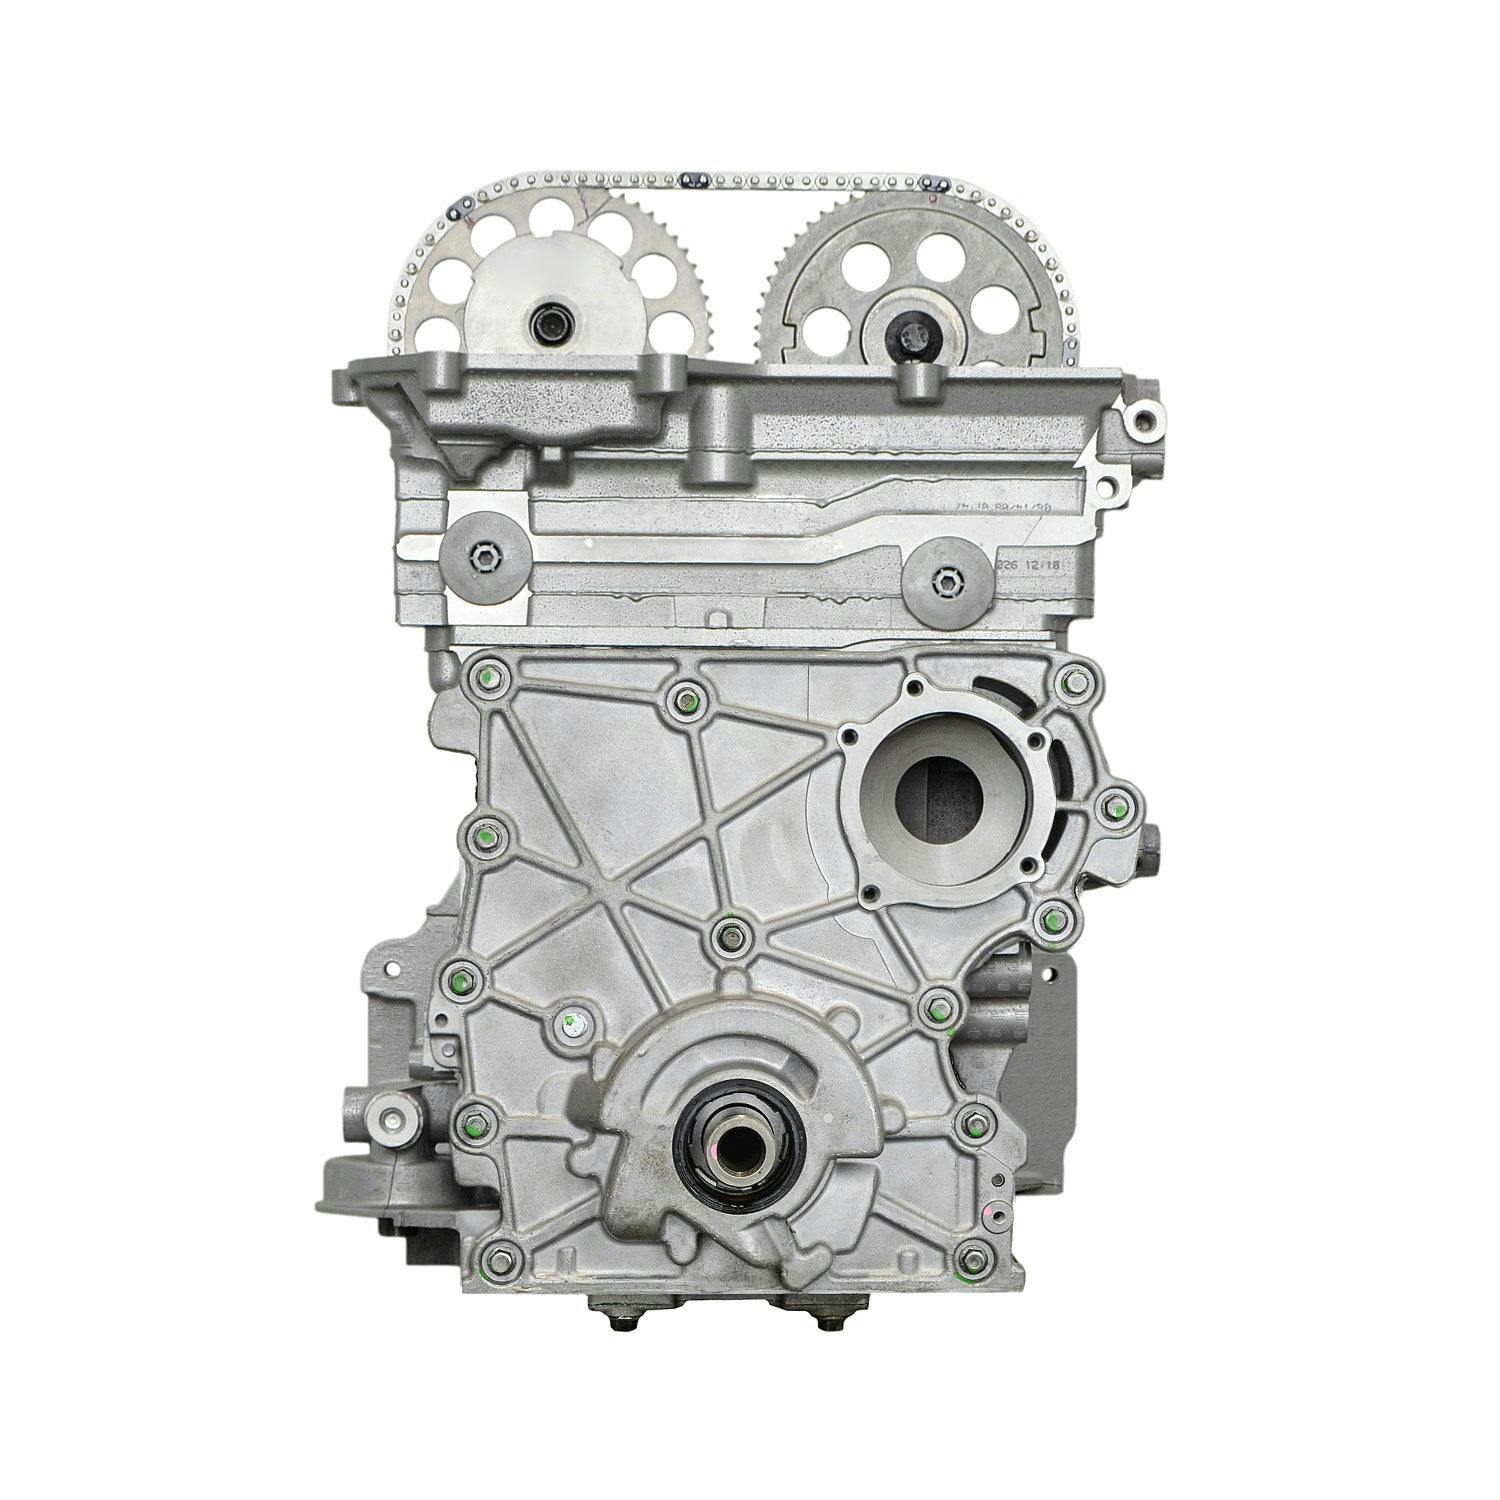 4.2L Inline-6 Engine for 2008-2009 Chevrolet Trailblazer/GMC Envoy/Isuzu Ascender/Saab 9-7x